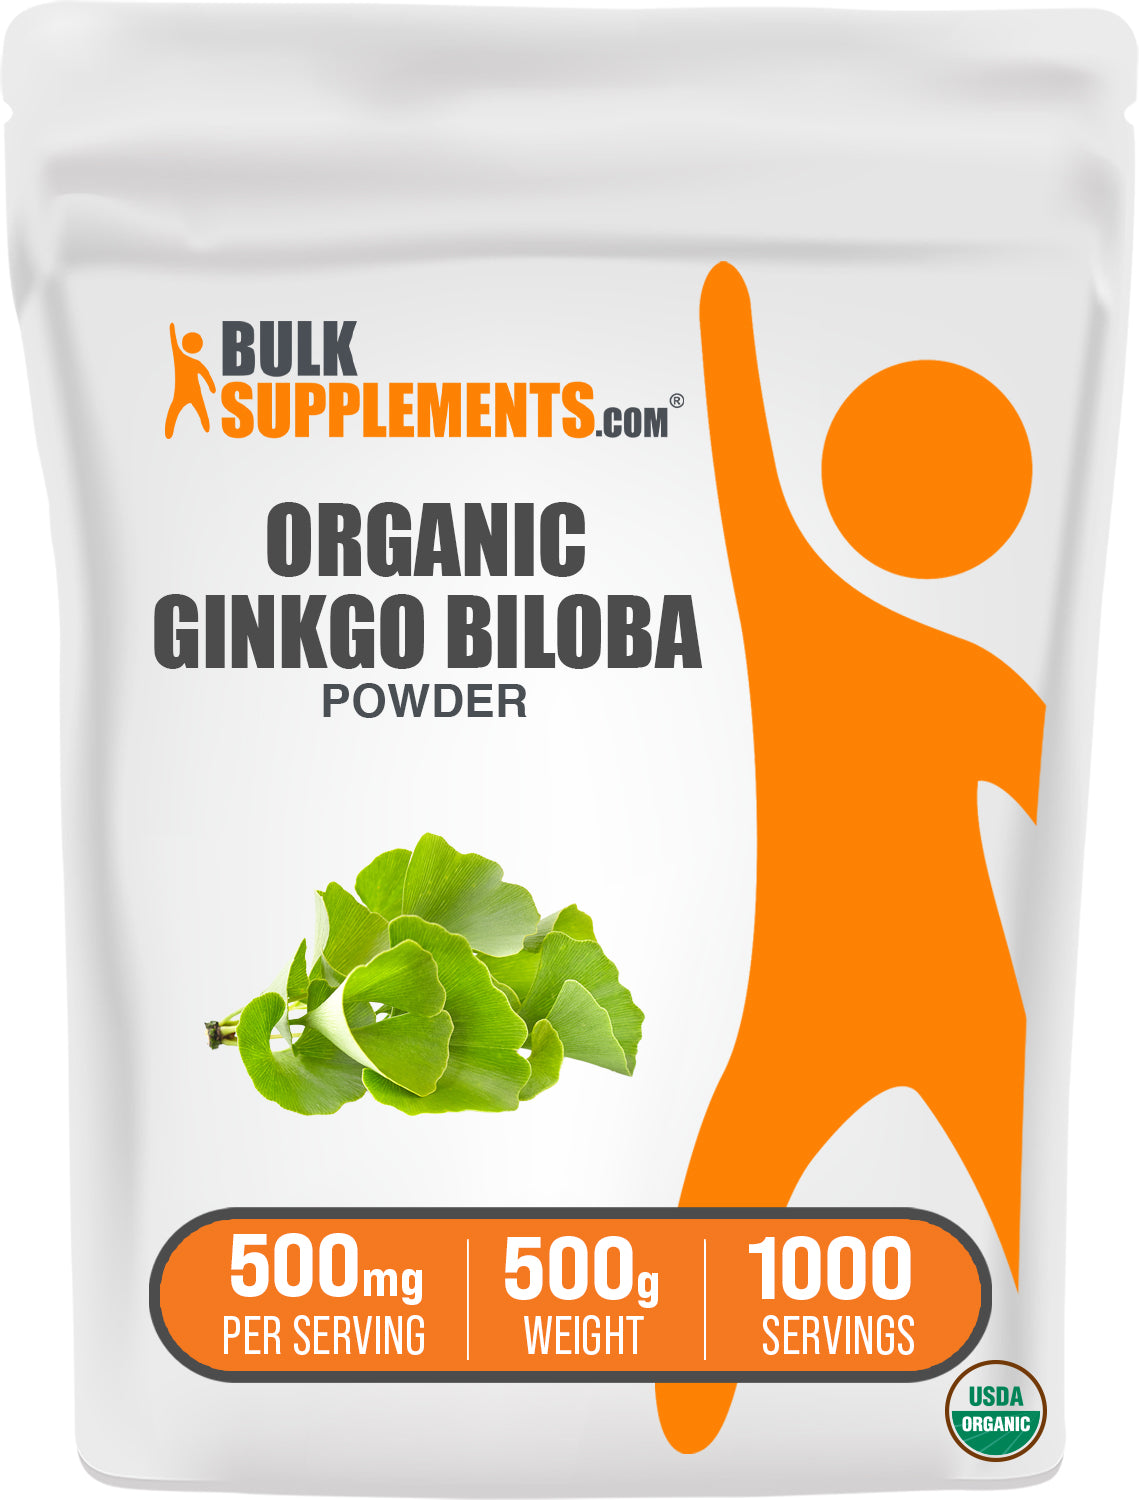 BulkSupplements.com Organic Ginkgo Biloba Powder 500g bag image